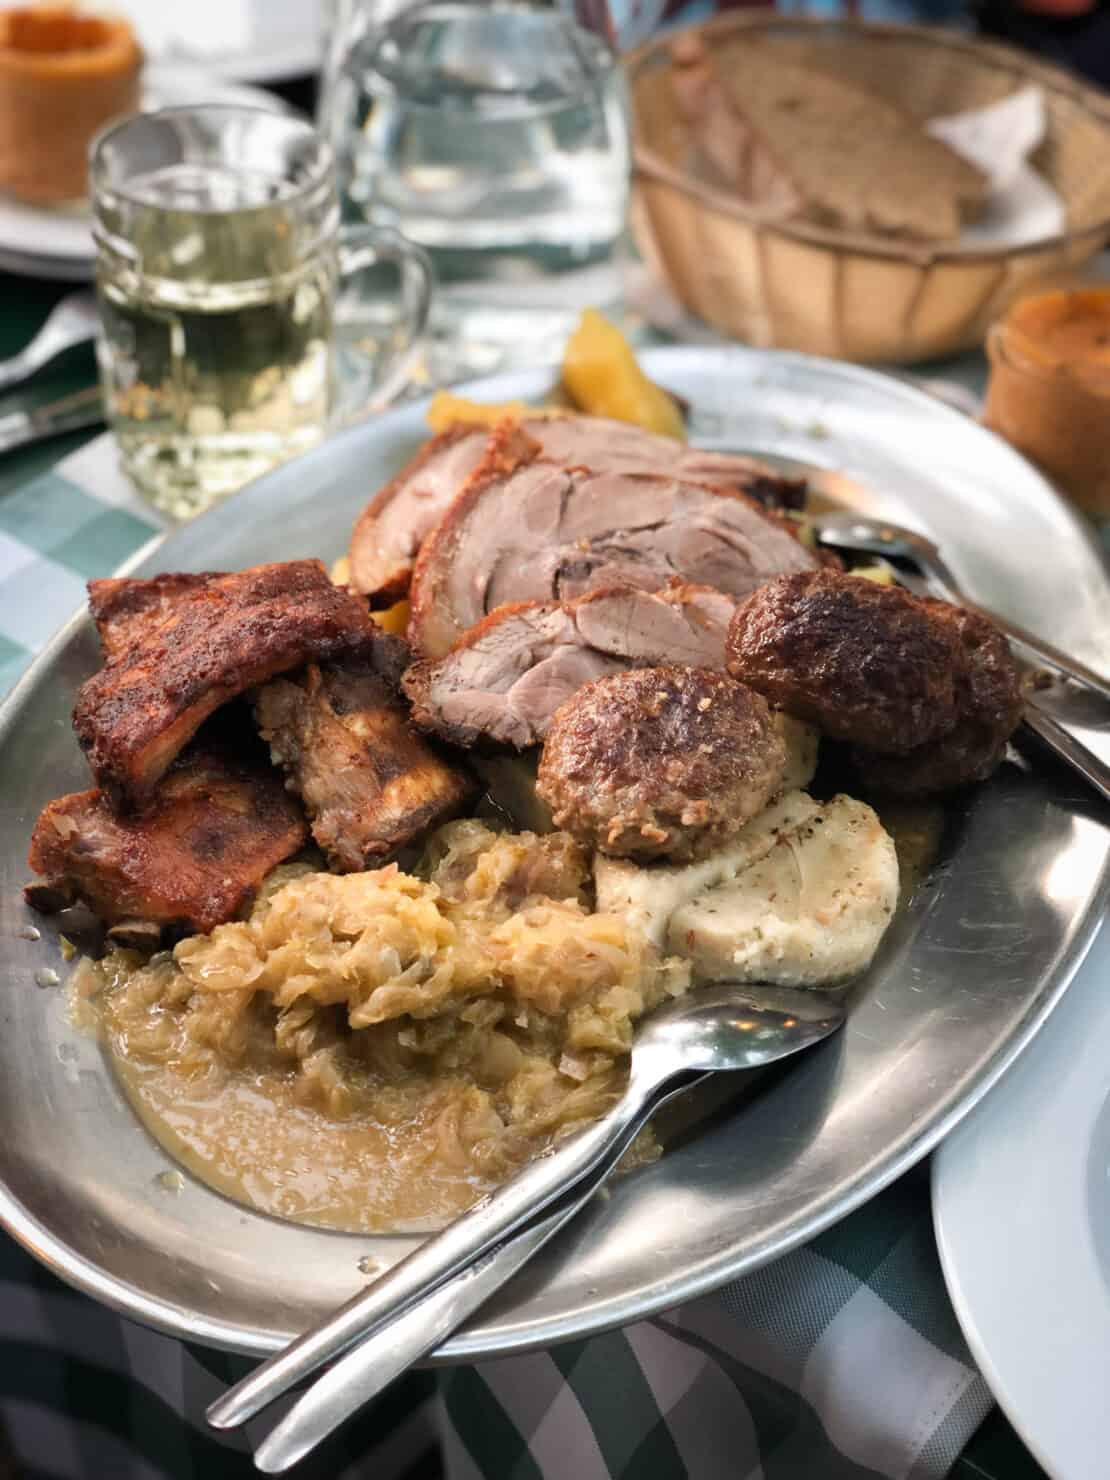 Zwiebelrostbraten Sunday roast dinner on a metal platter near Vienna